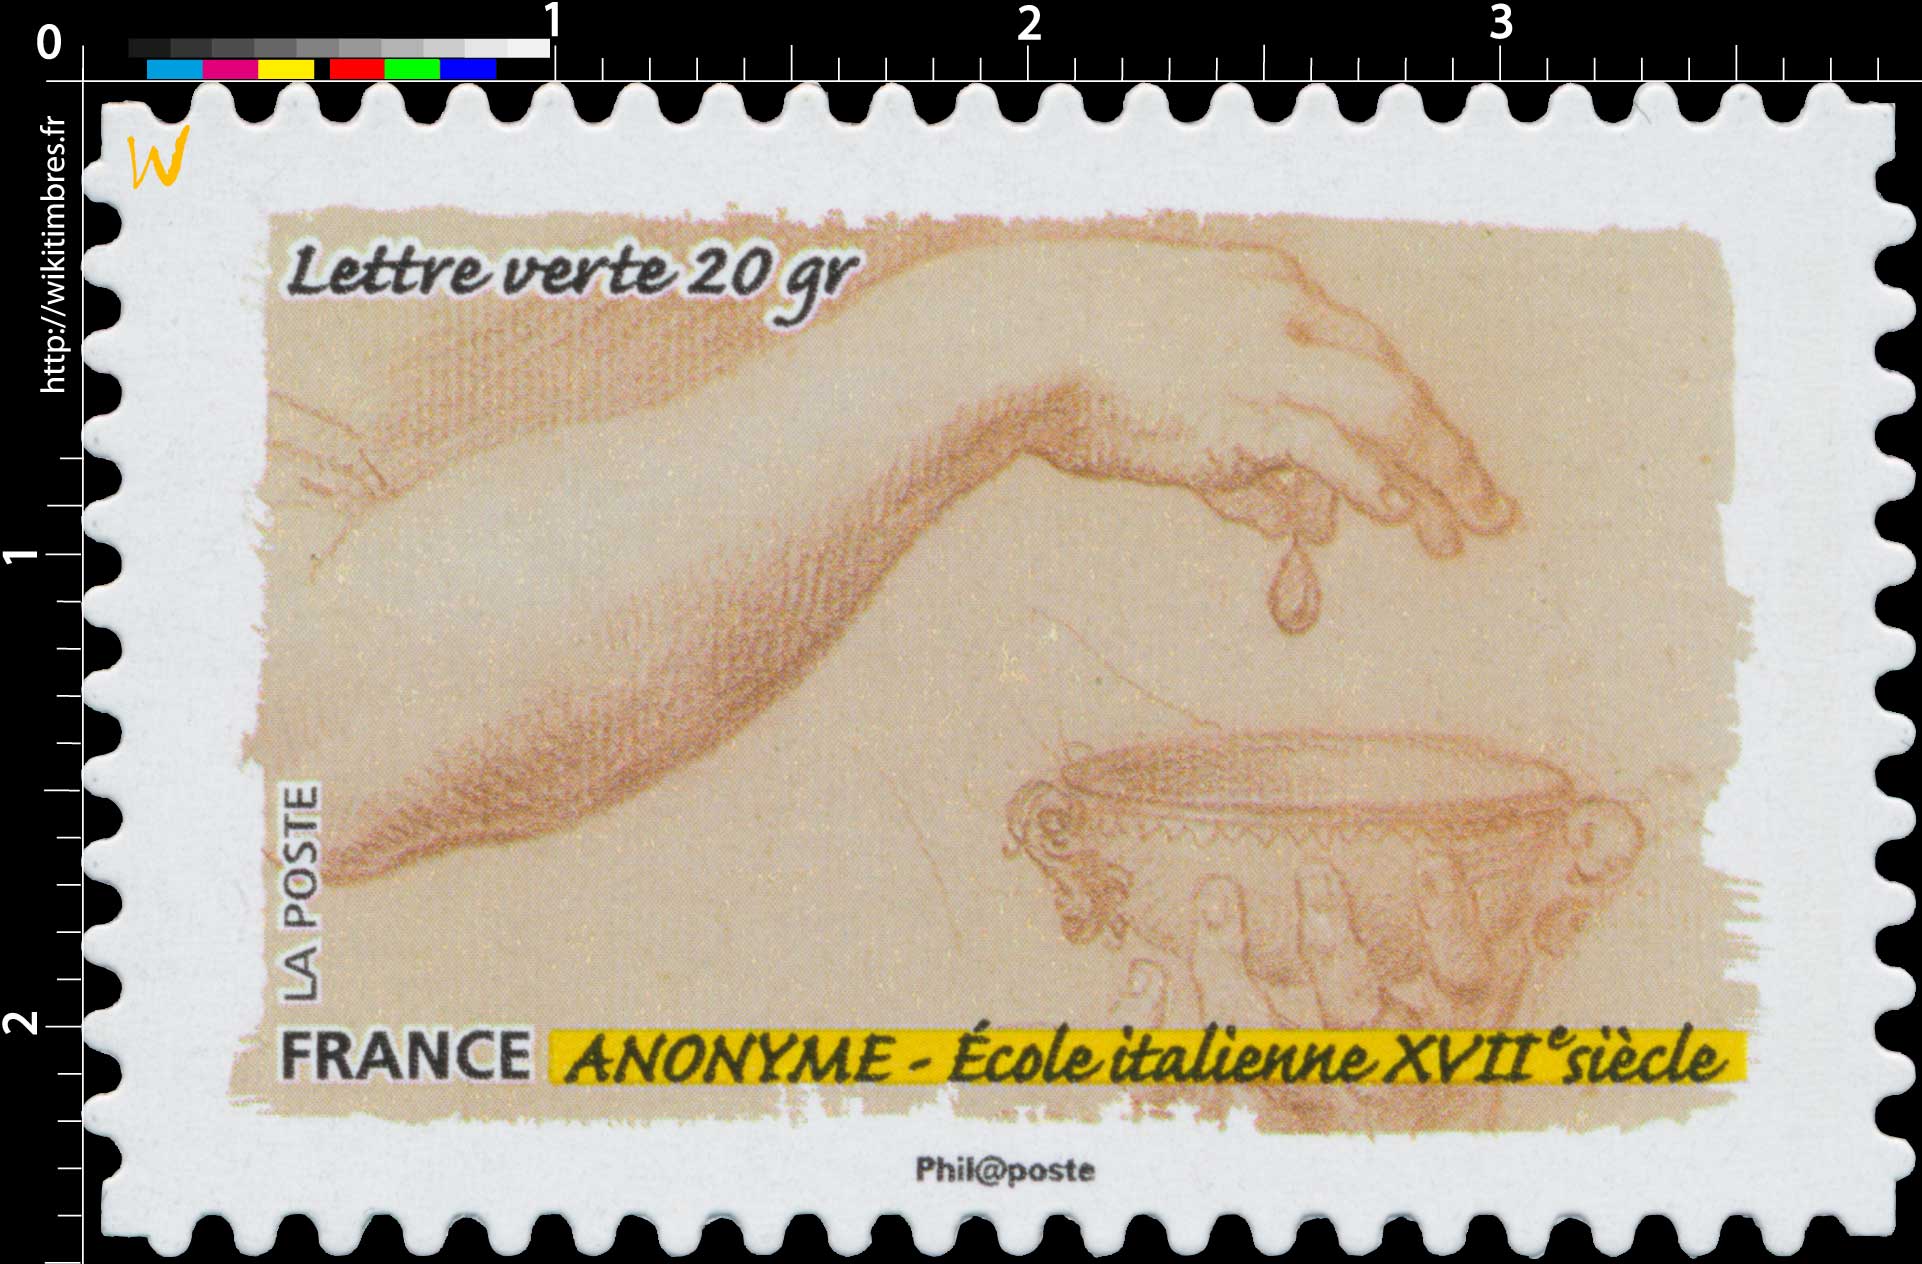 2015 Anonyme - Ecole italienne XVIIe siècle